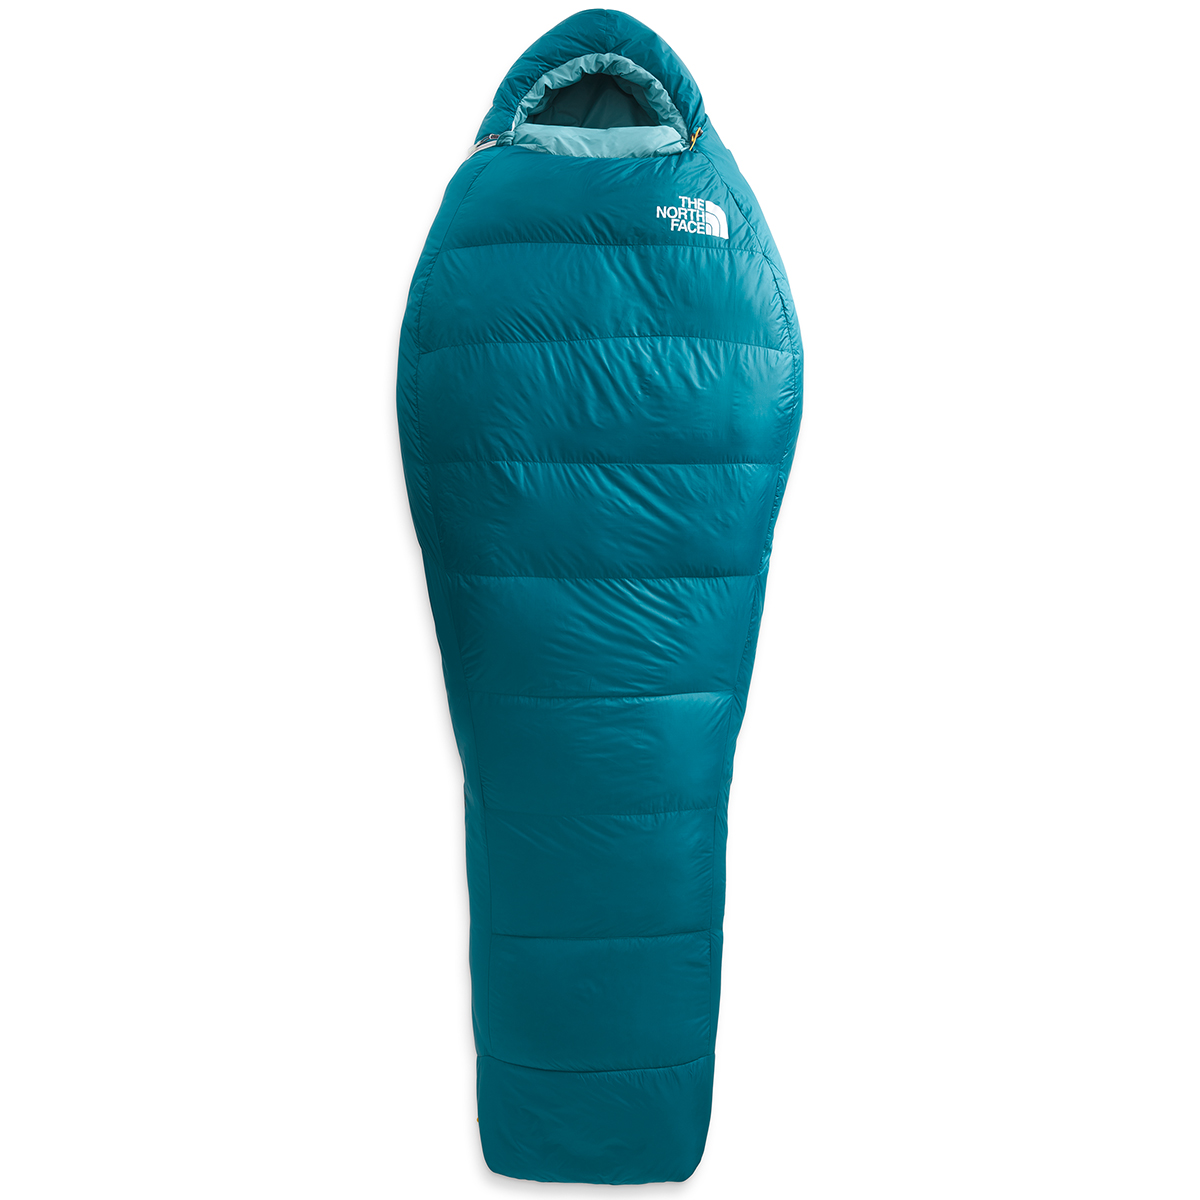 The North Face Trail Lite Down 20 Sleeping Bag